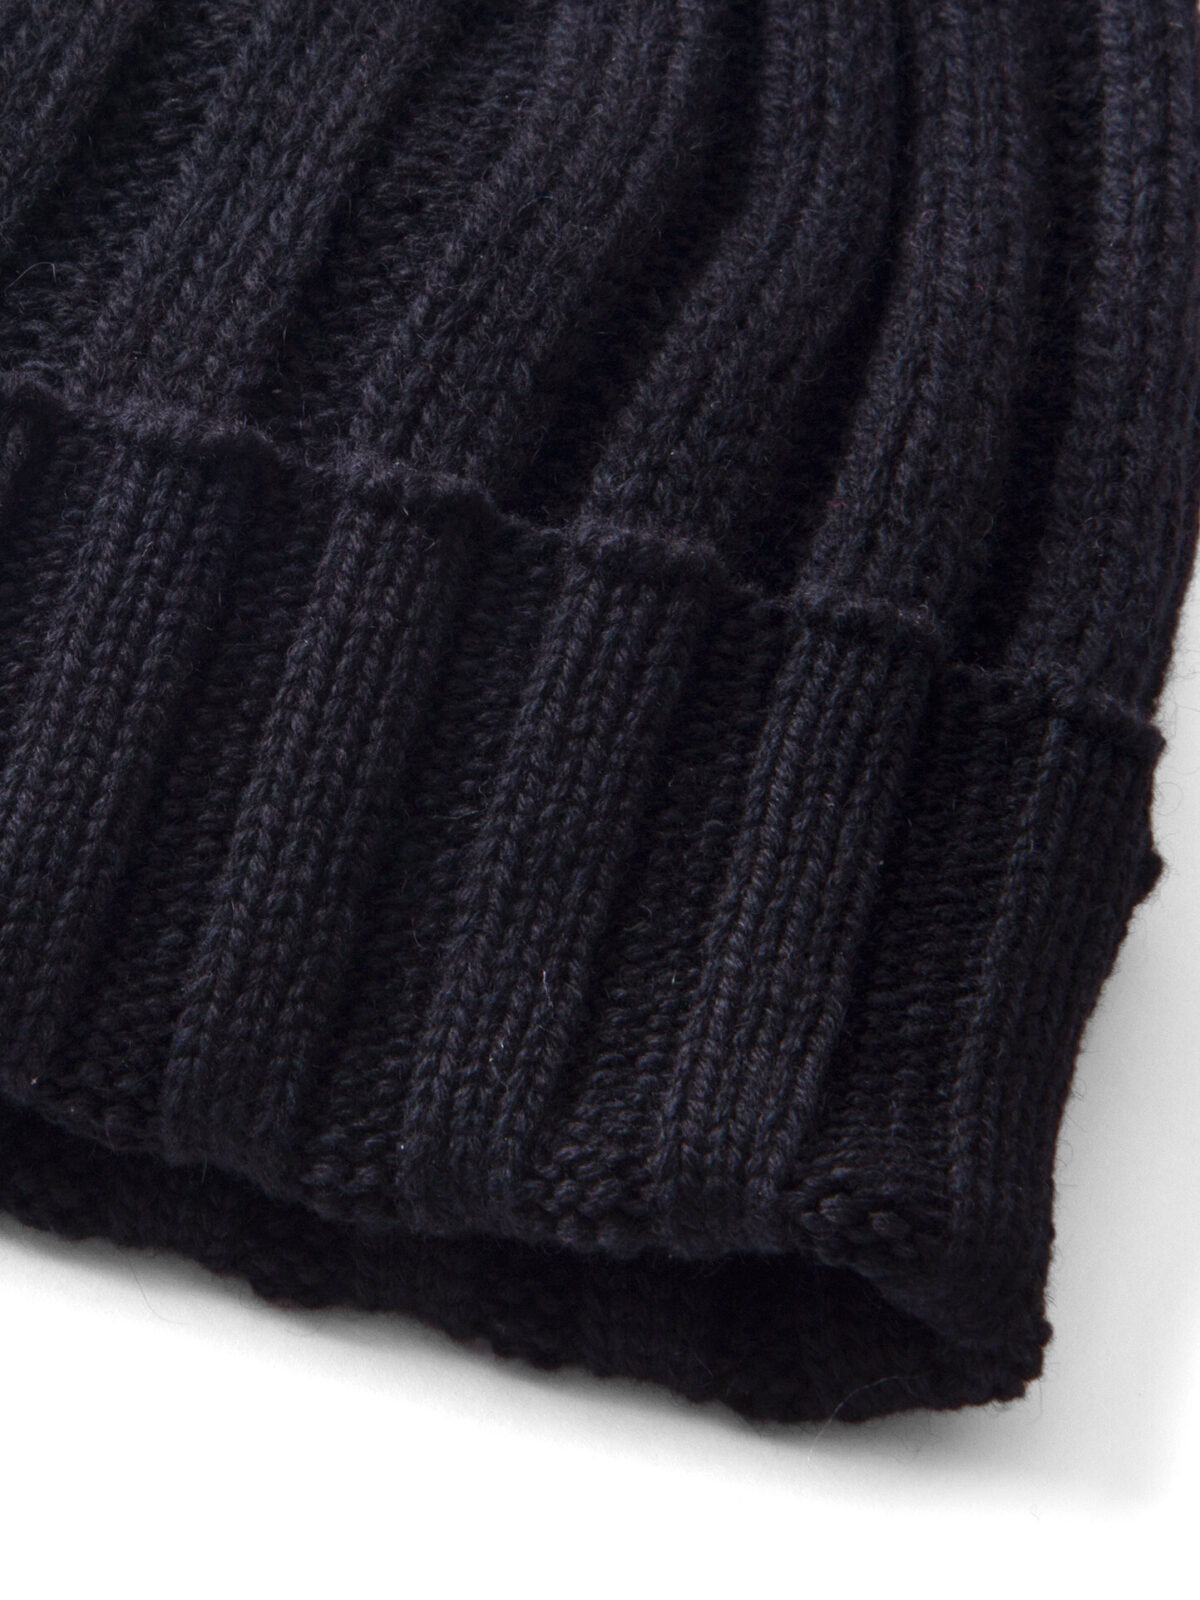 Black Cashmere Knit Hat